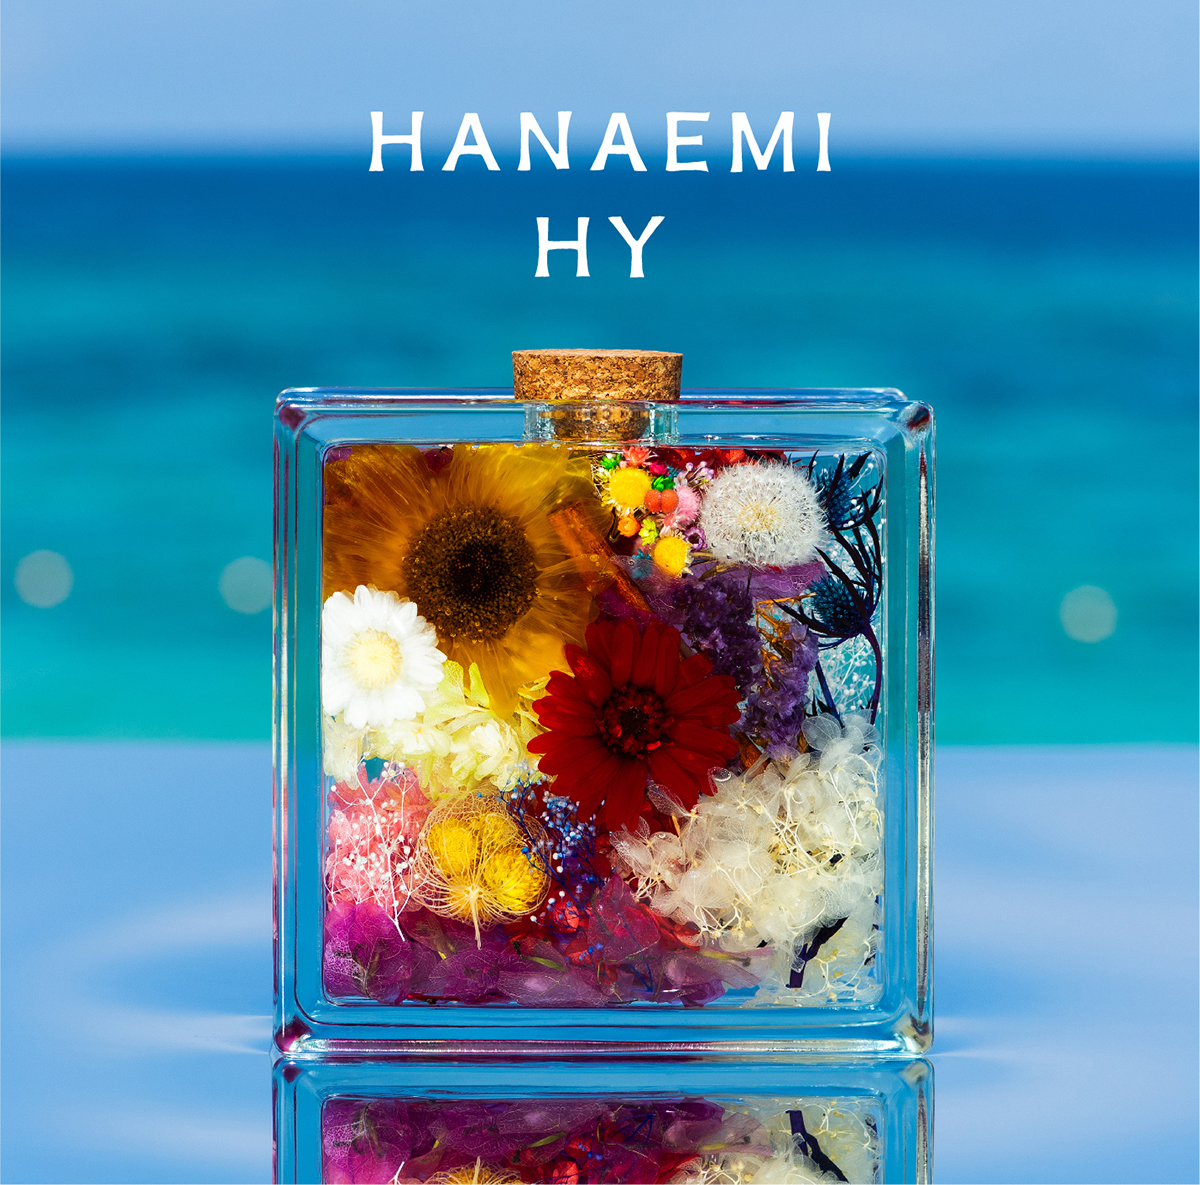 HY　14thオリジナルアルバム「HANAEMI」通常盤